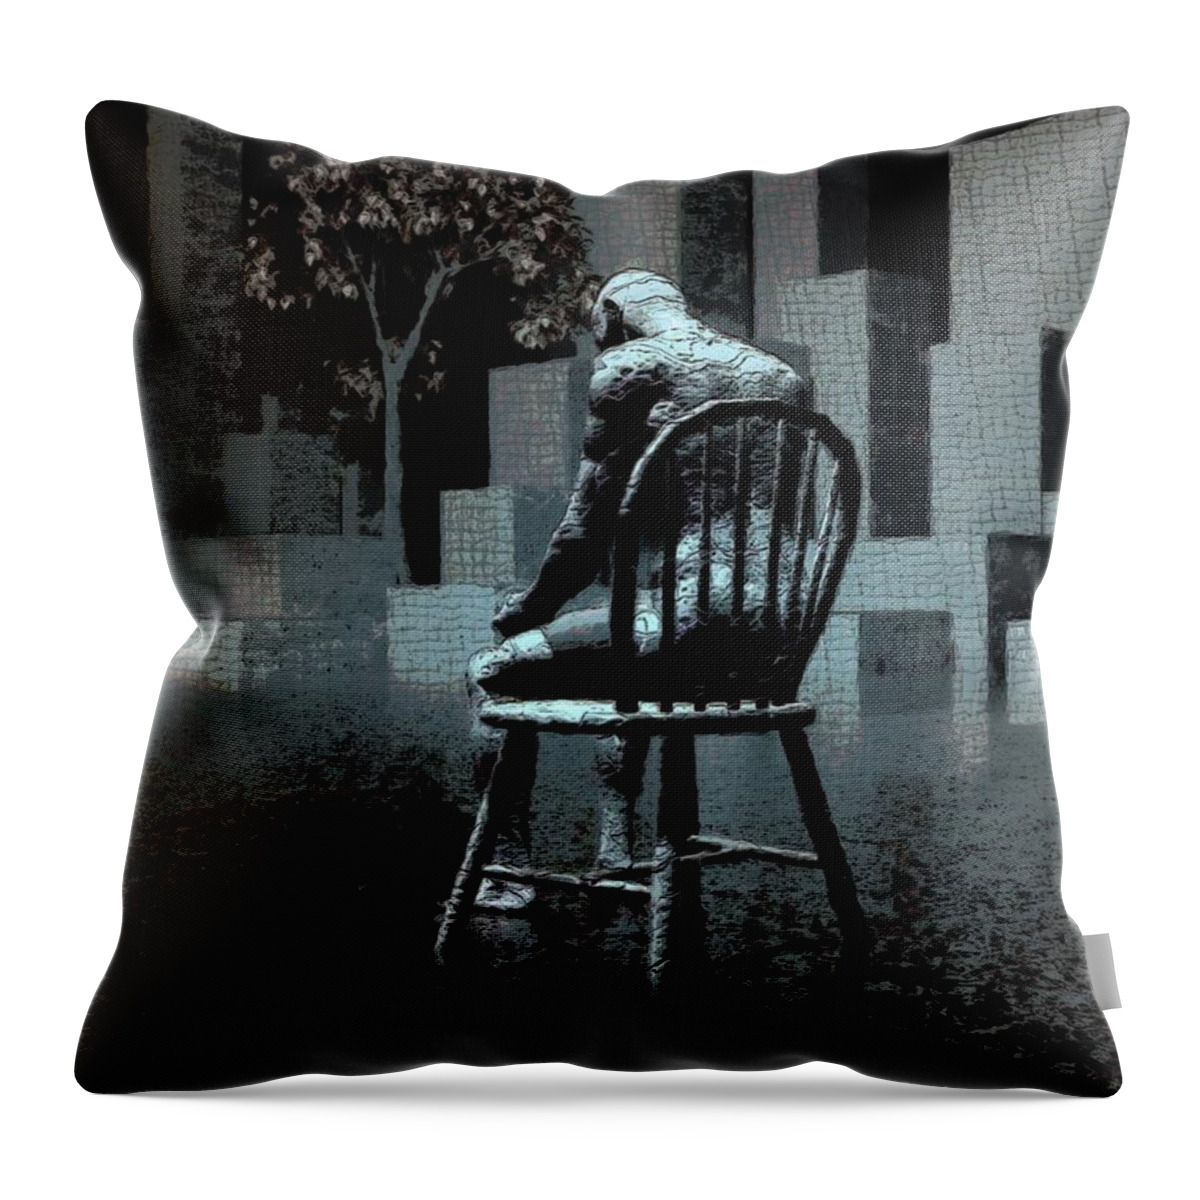 Surreal Throw Pillow featuring the digital art Cancerous Retrospection by John Alexander